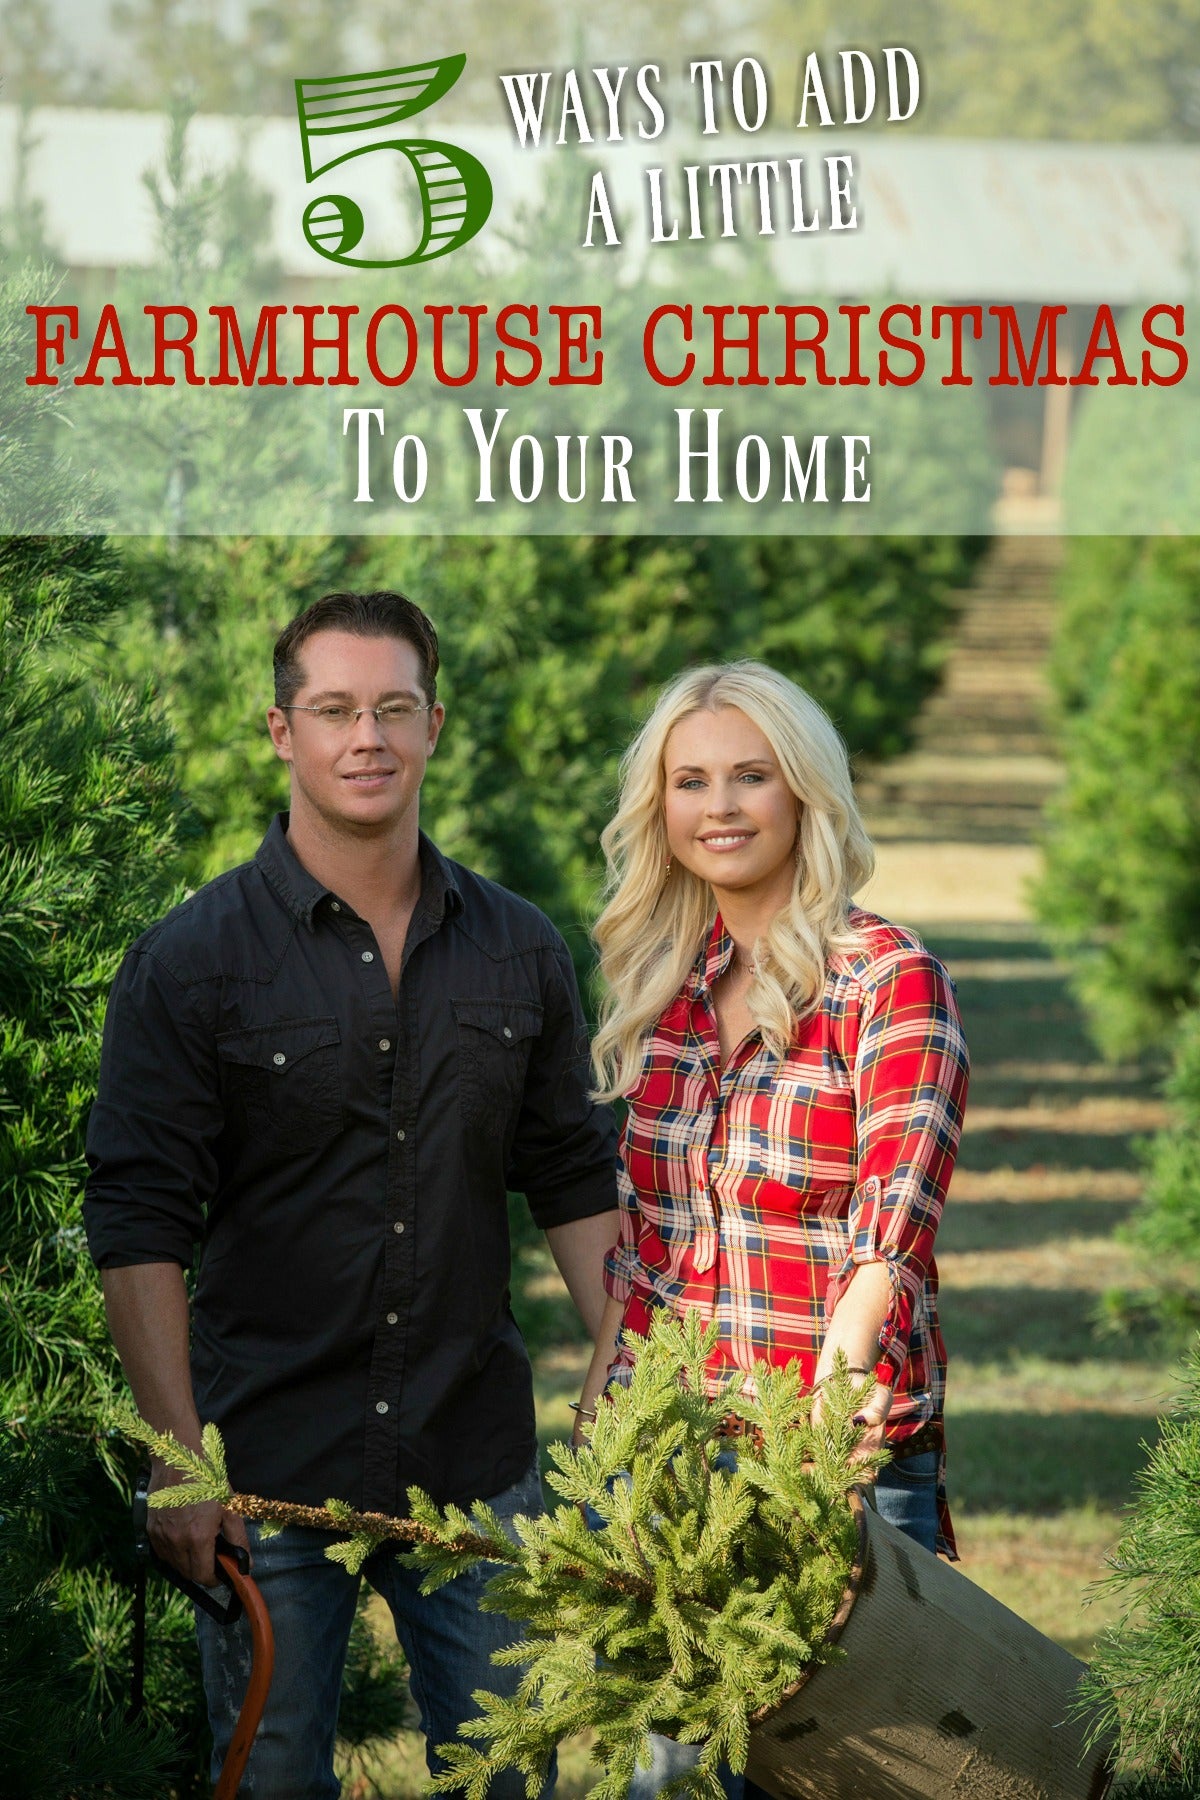 Cherami's 5 Farmhouse Christmas Tips!